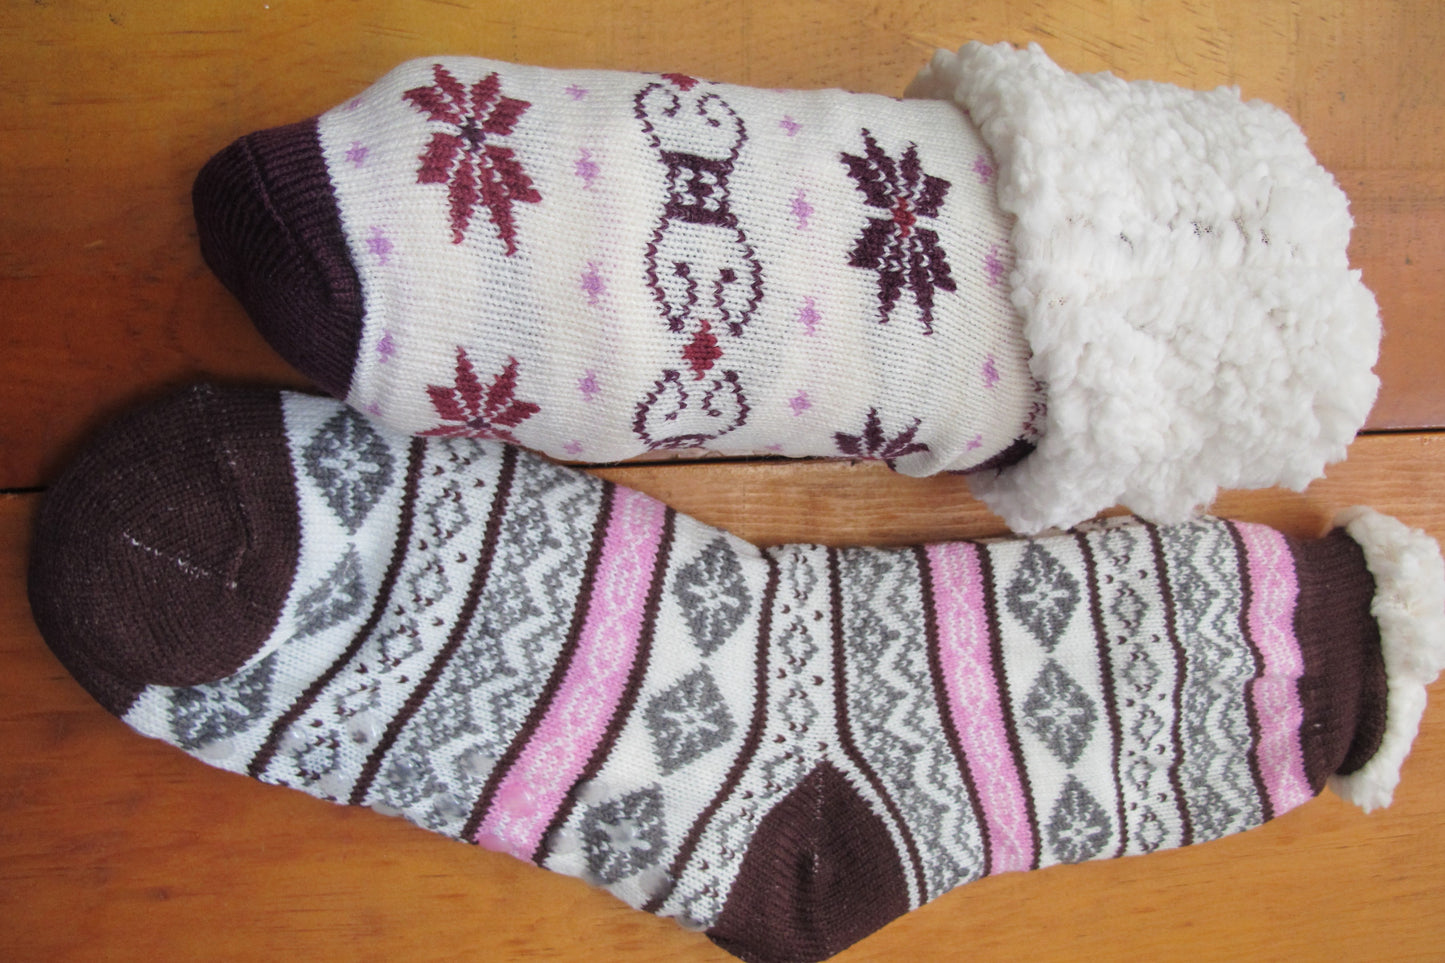 Sherpa-Lined Cabin Socks.  Purple, grey and light purple color.  Snowflake and fairisle design